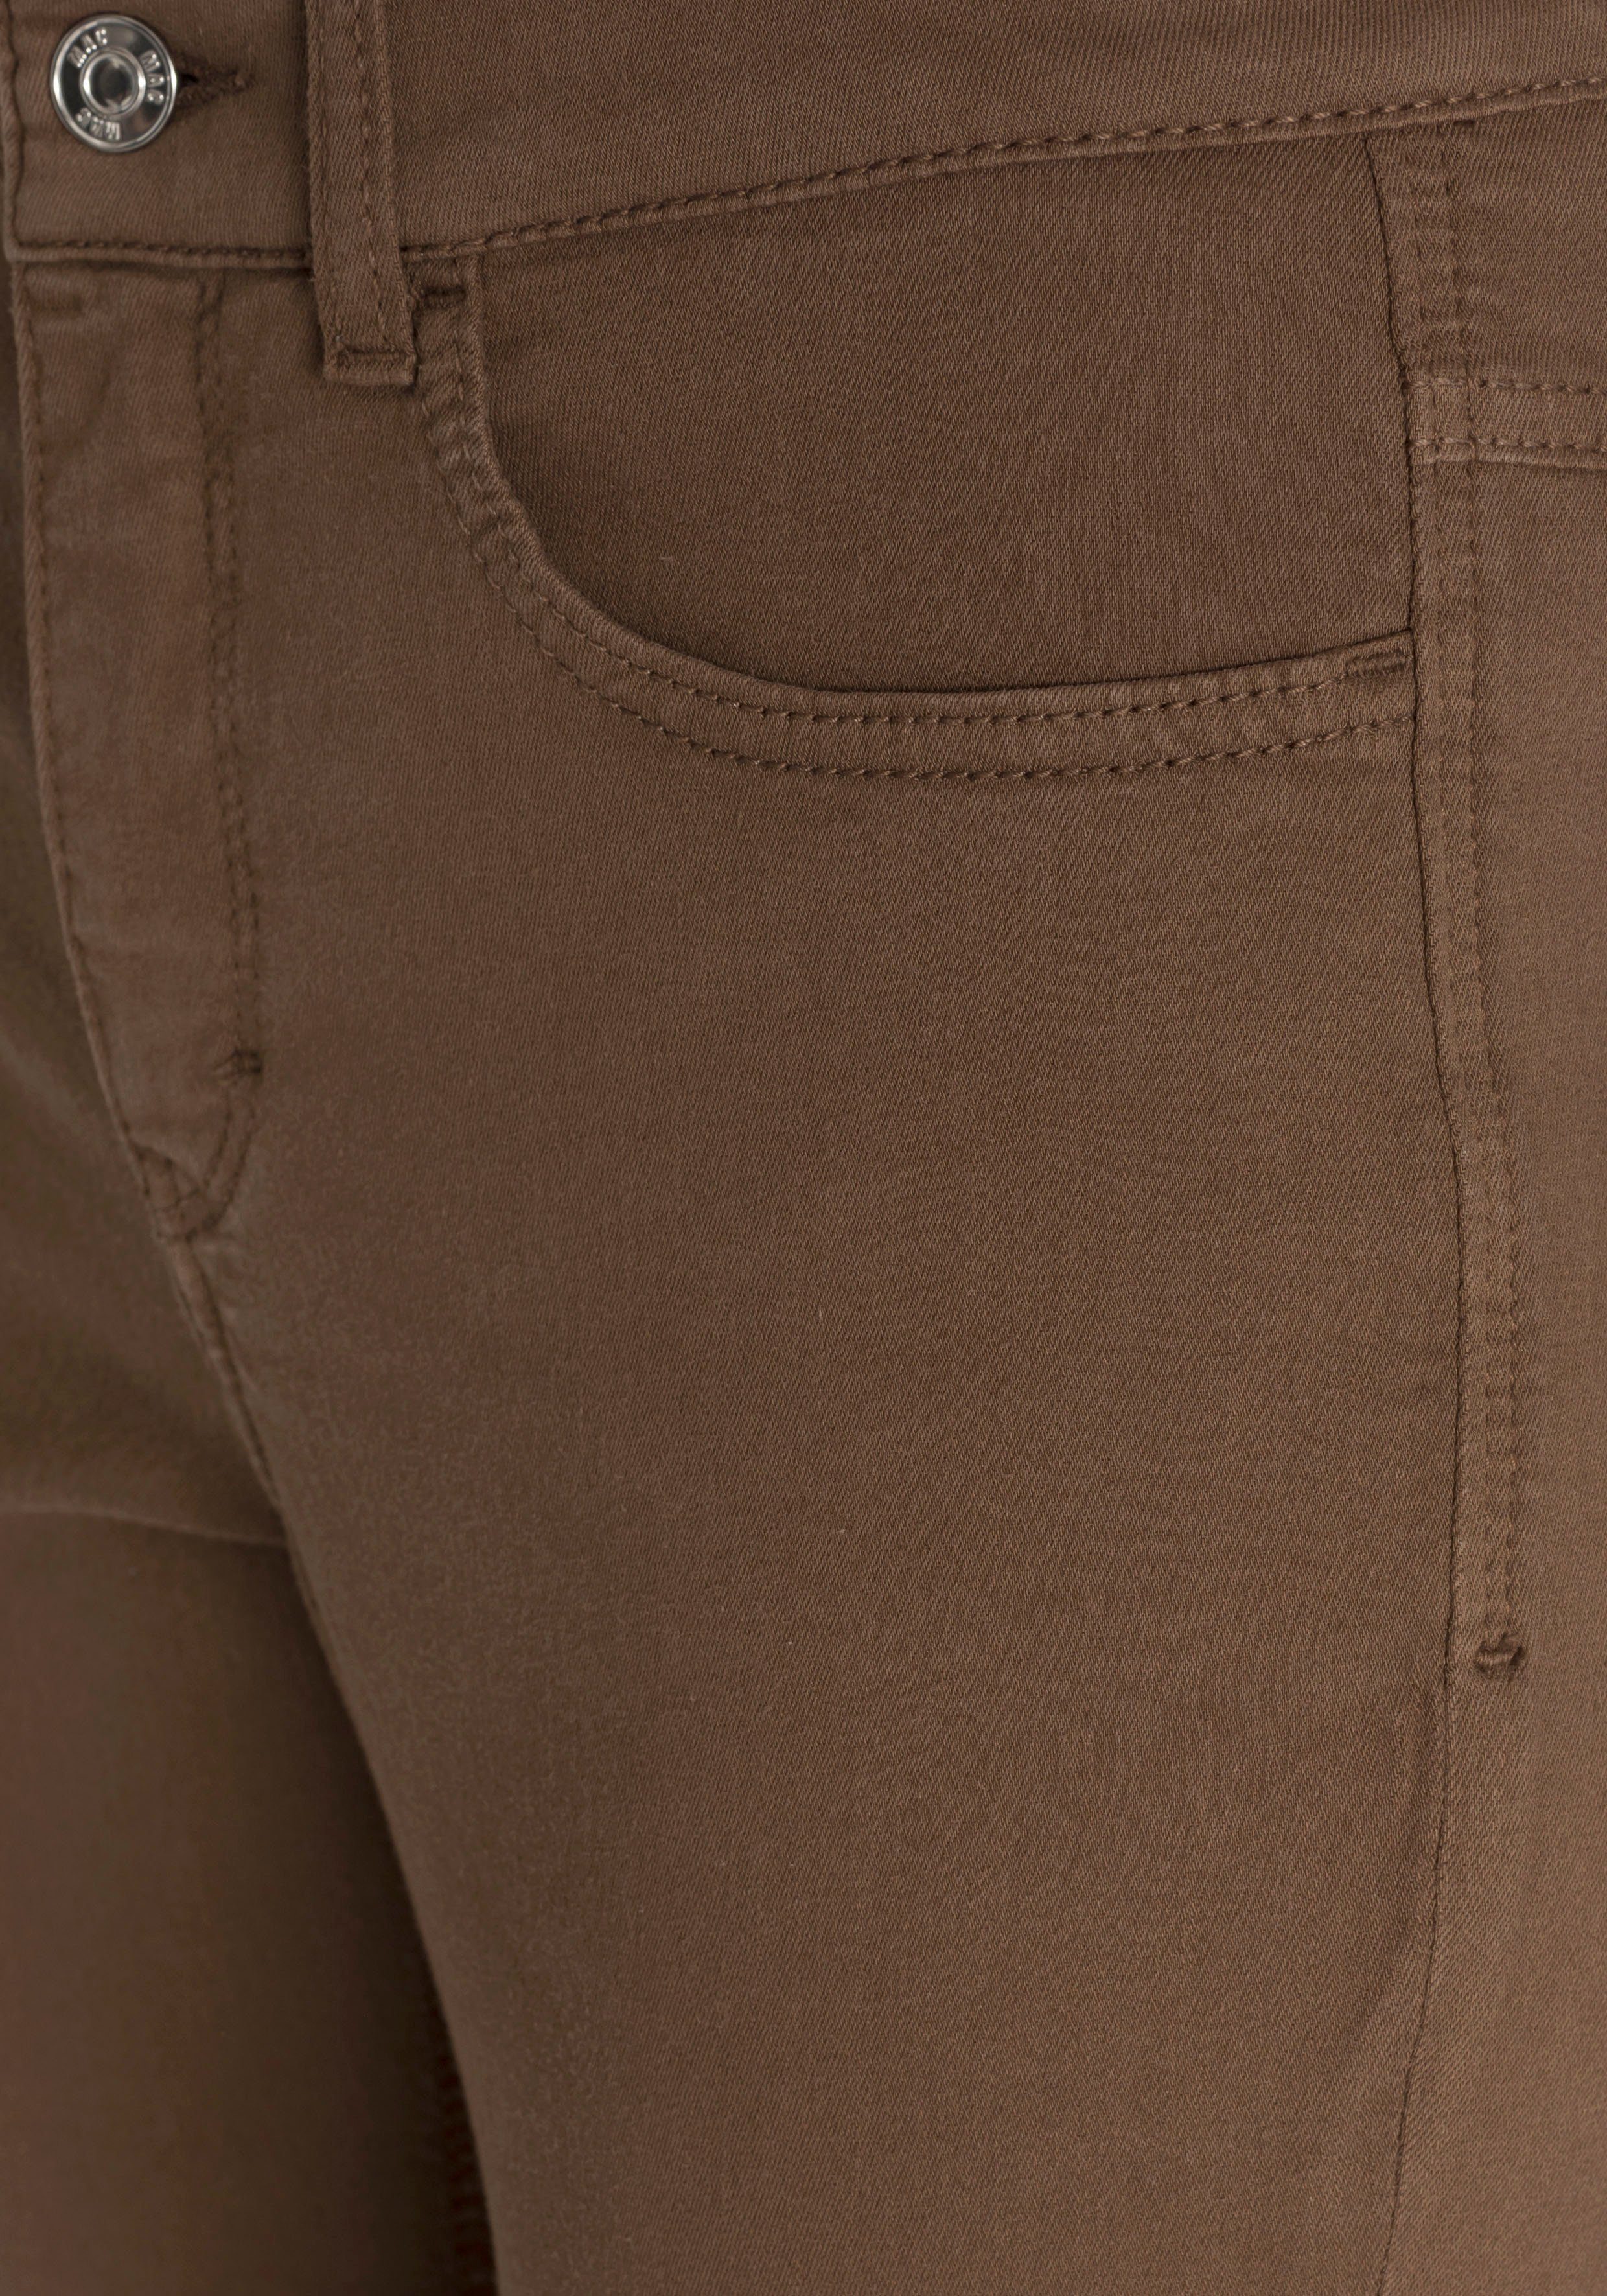 MAC Skinny-fit-Jeans Hiperstretch-Skinny bequem Tag sitzt fawn brown Power-Stretch Qualität den ganzen